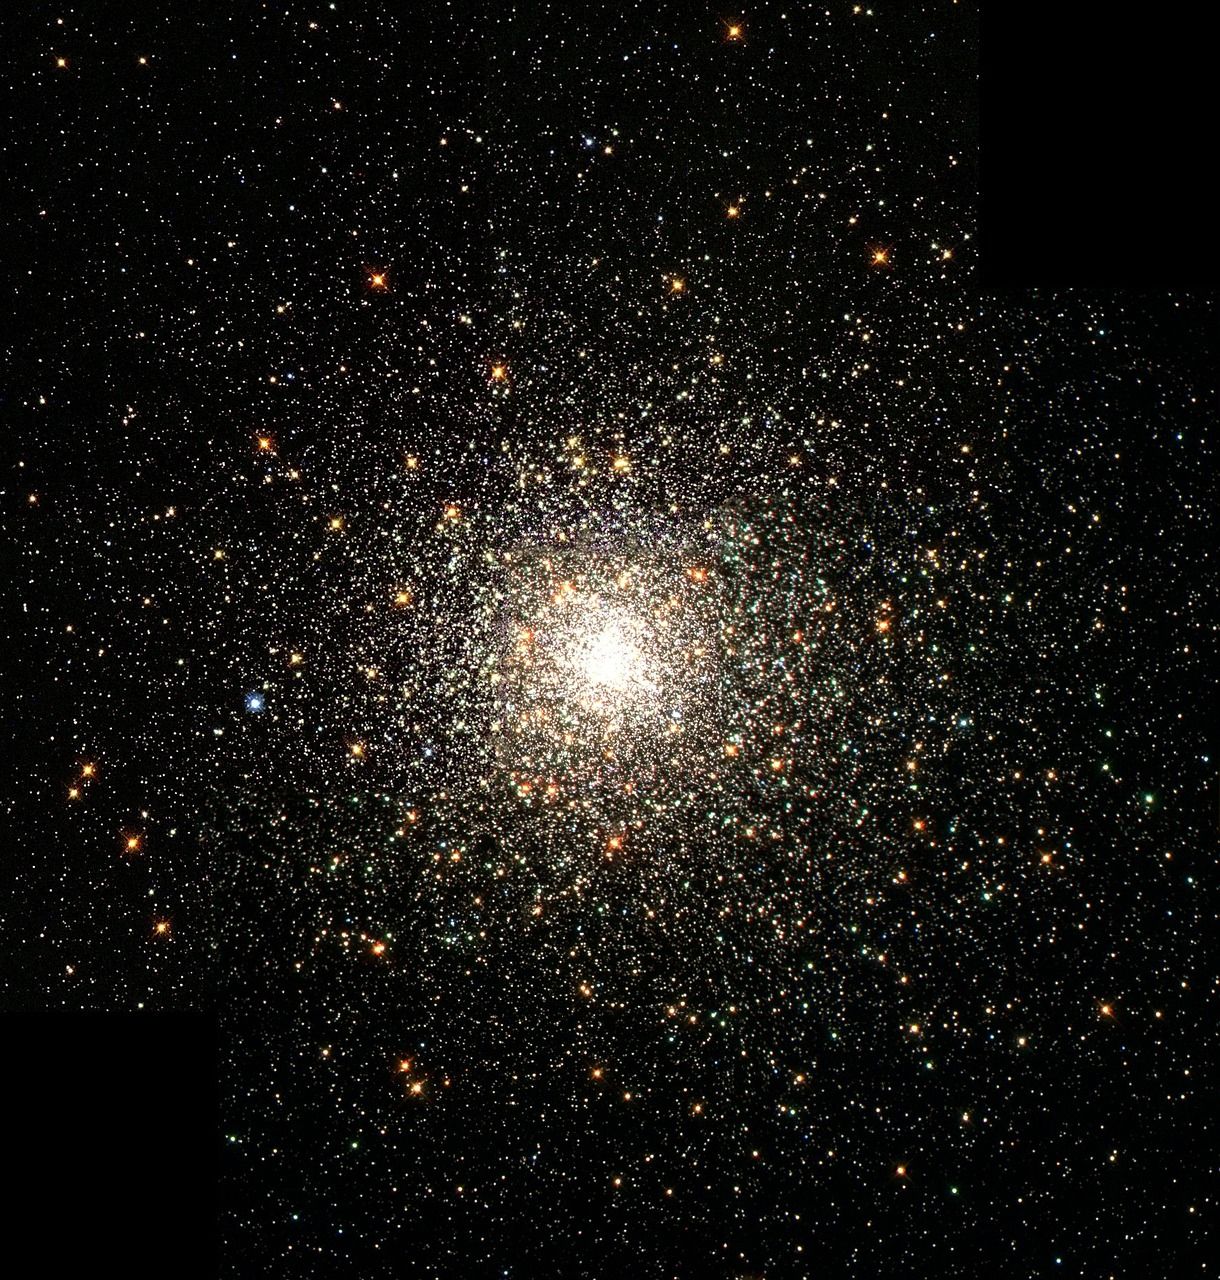 An example of a globular star cluster.